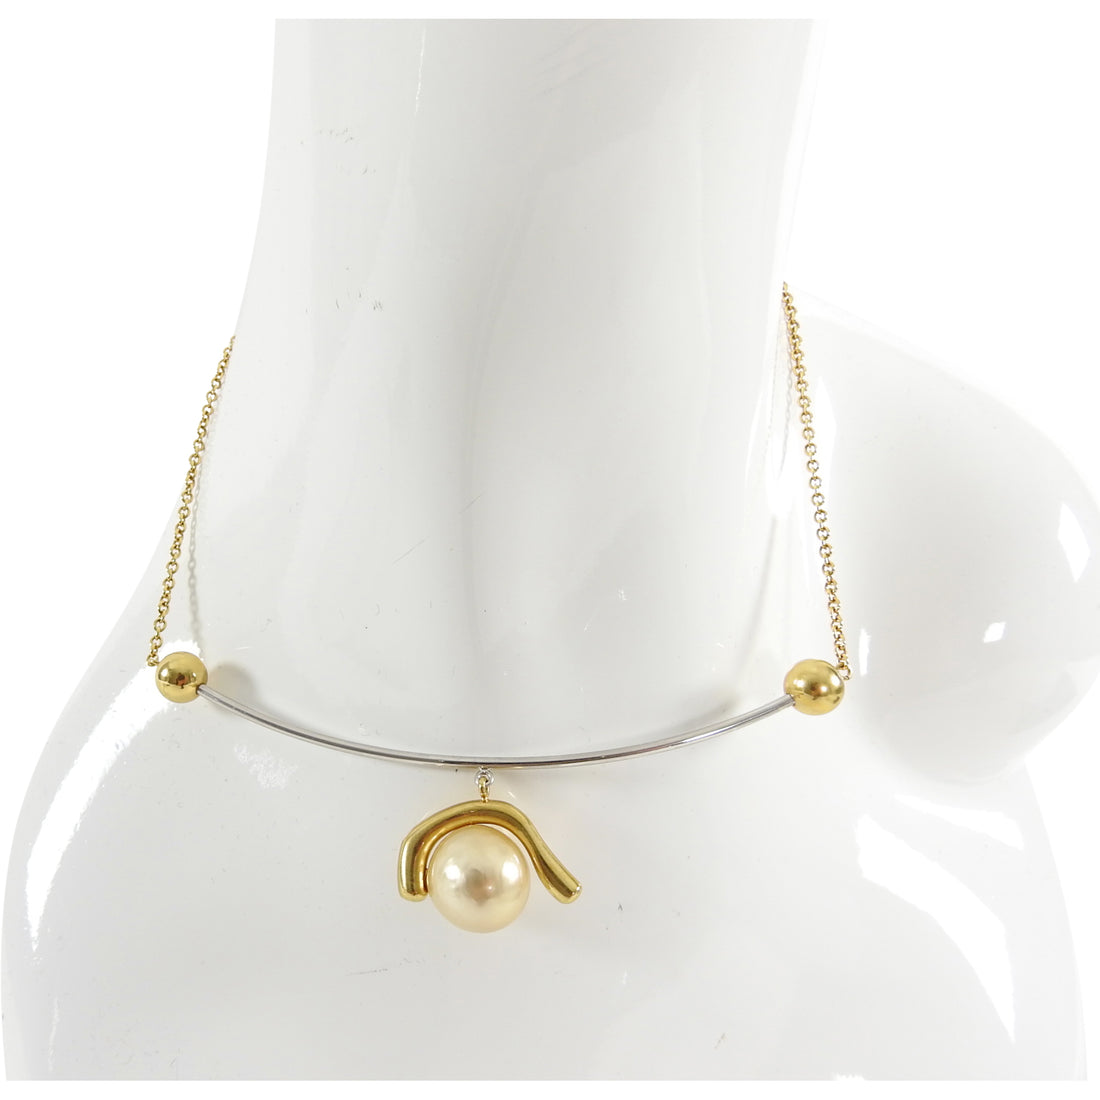 Celine Geometric Modernist Pearl Pendant Necklace